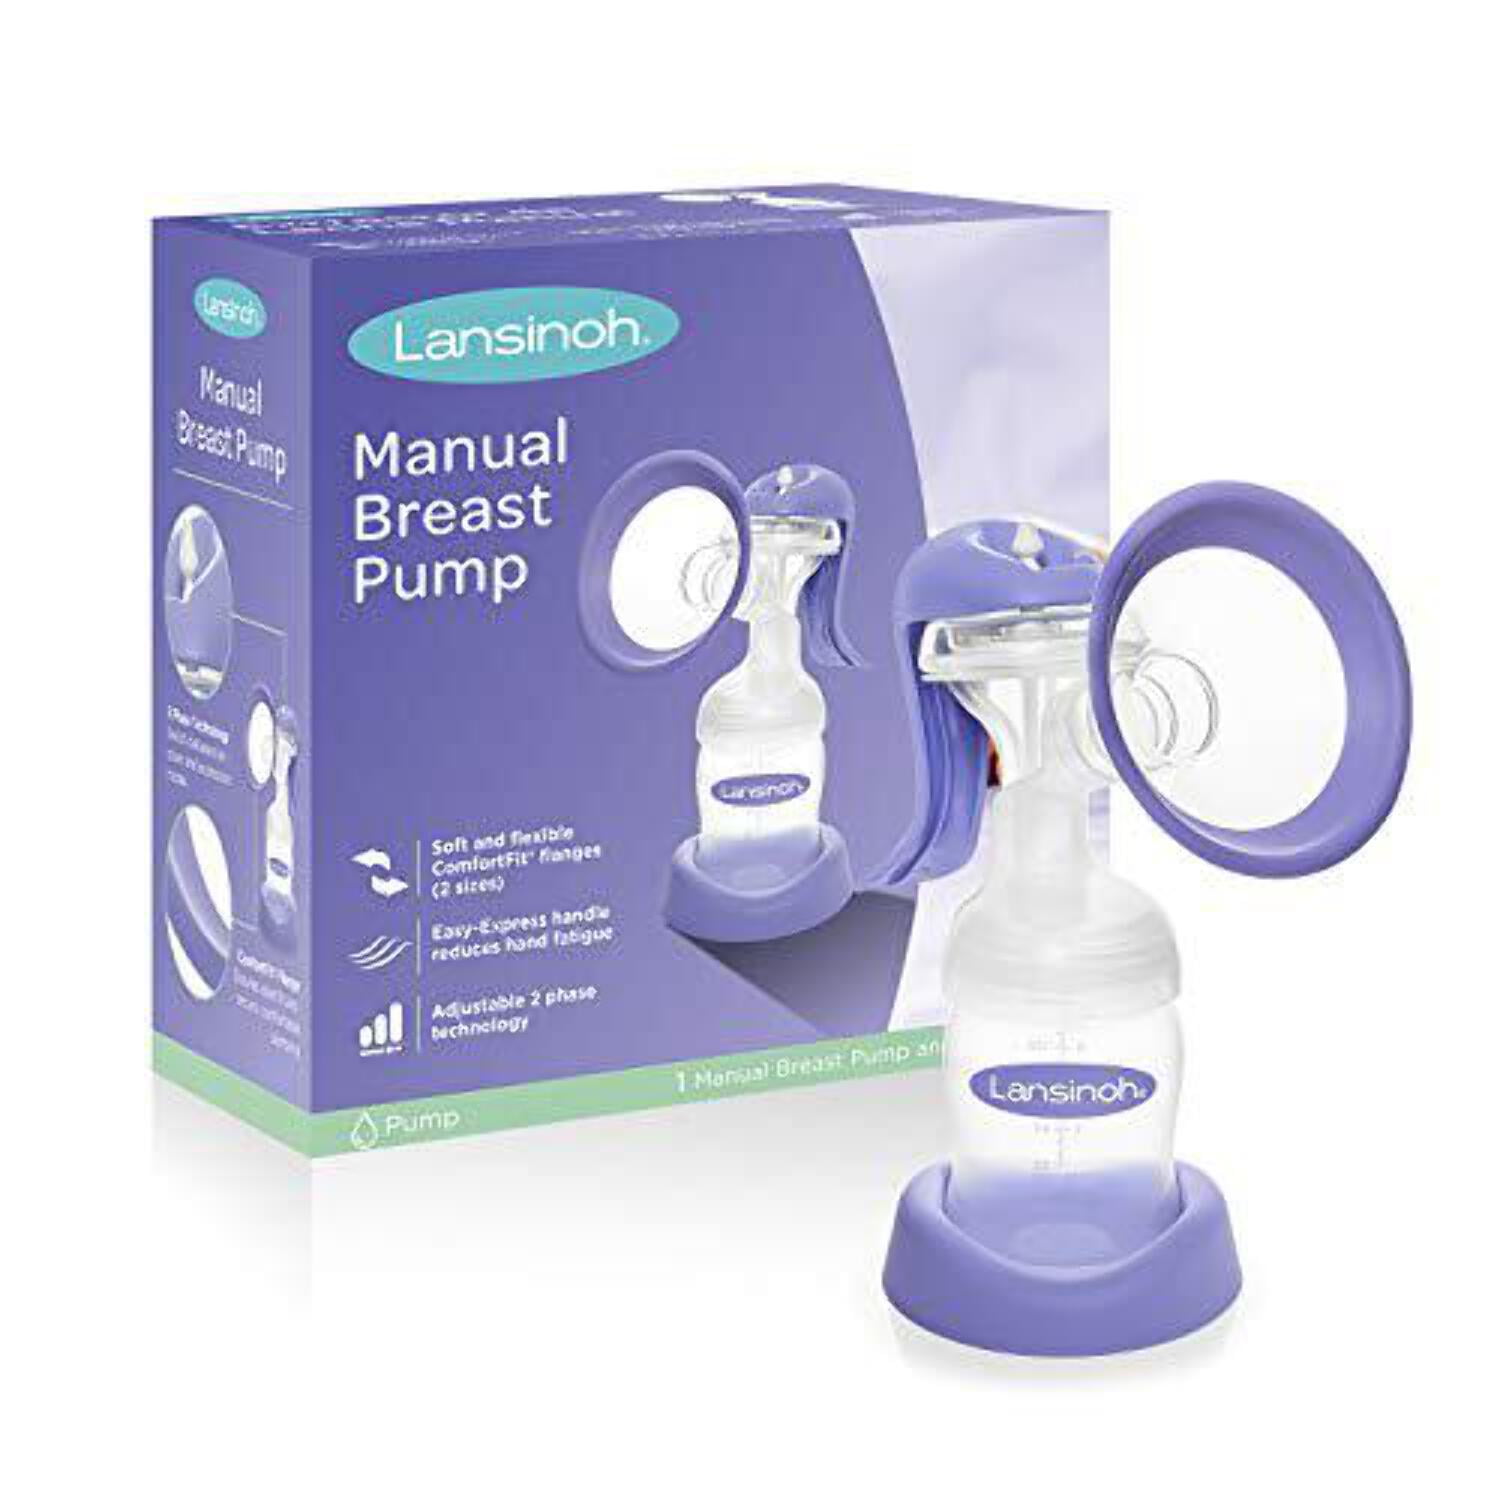 Lansinoh Stay Dry Disposable Nursing Pads for Breastfeeding, 60